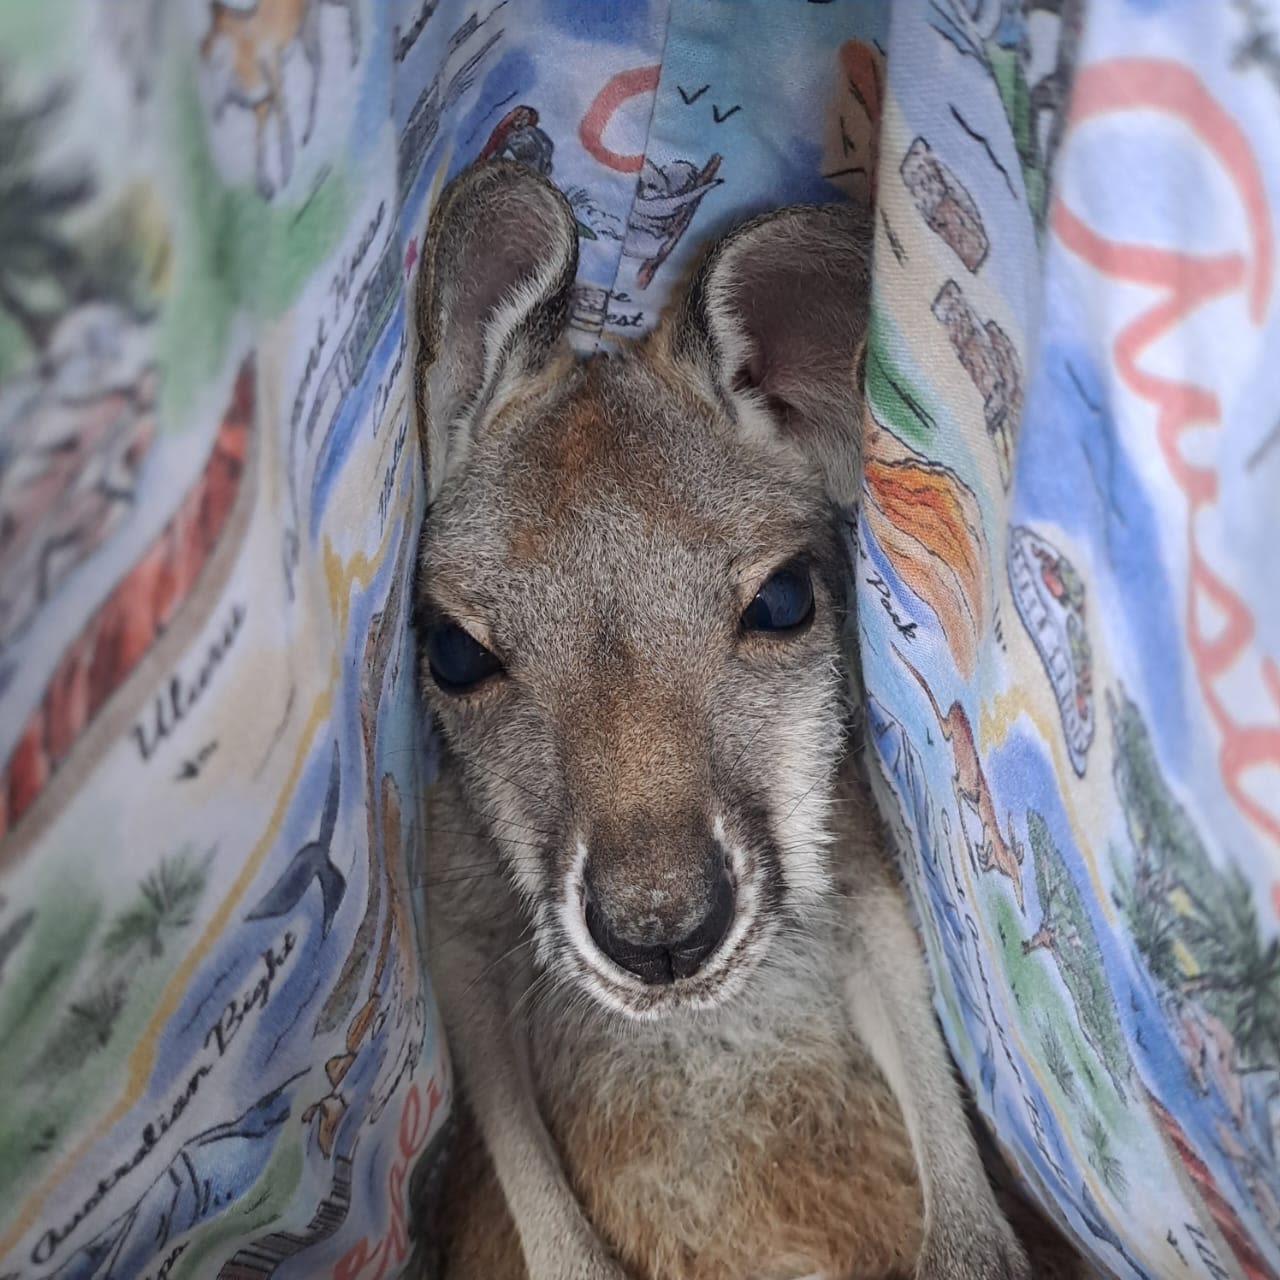 A baby kangaroo on Necker Island